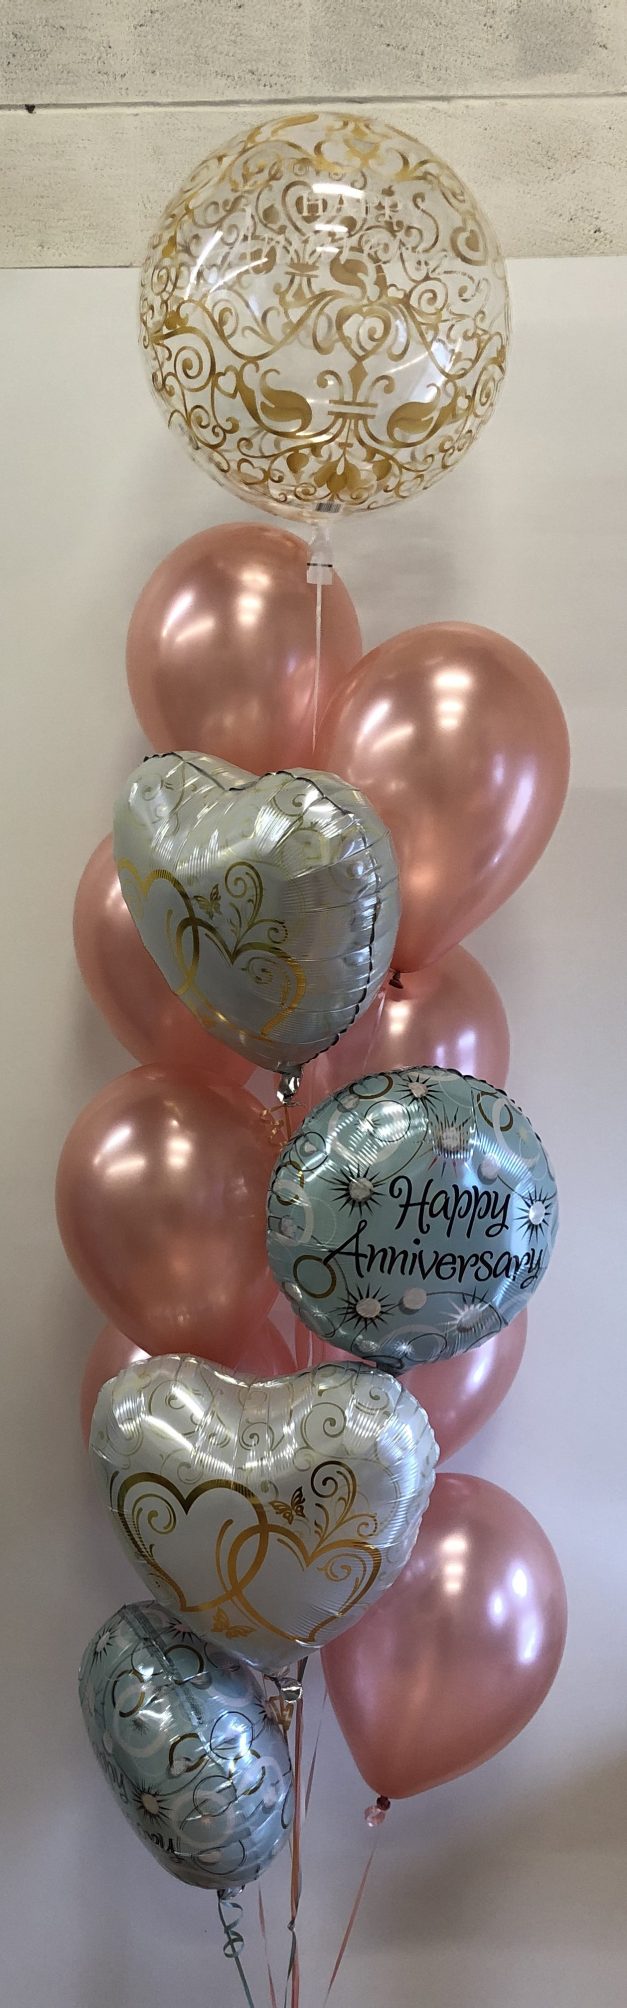 helium pillar of 13 anniversary balloons